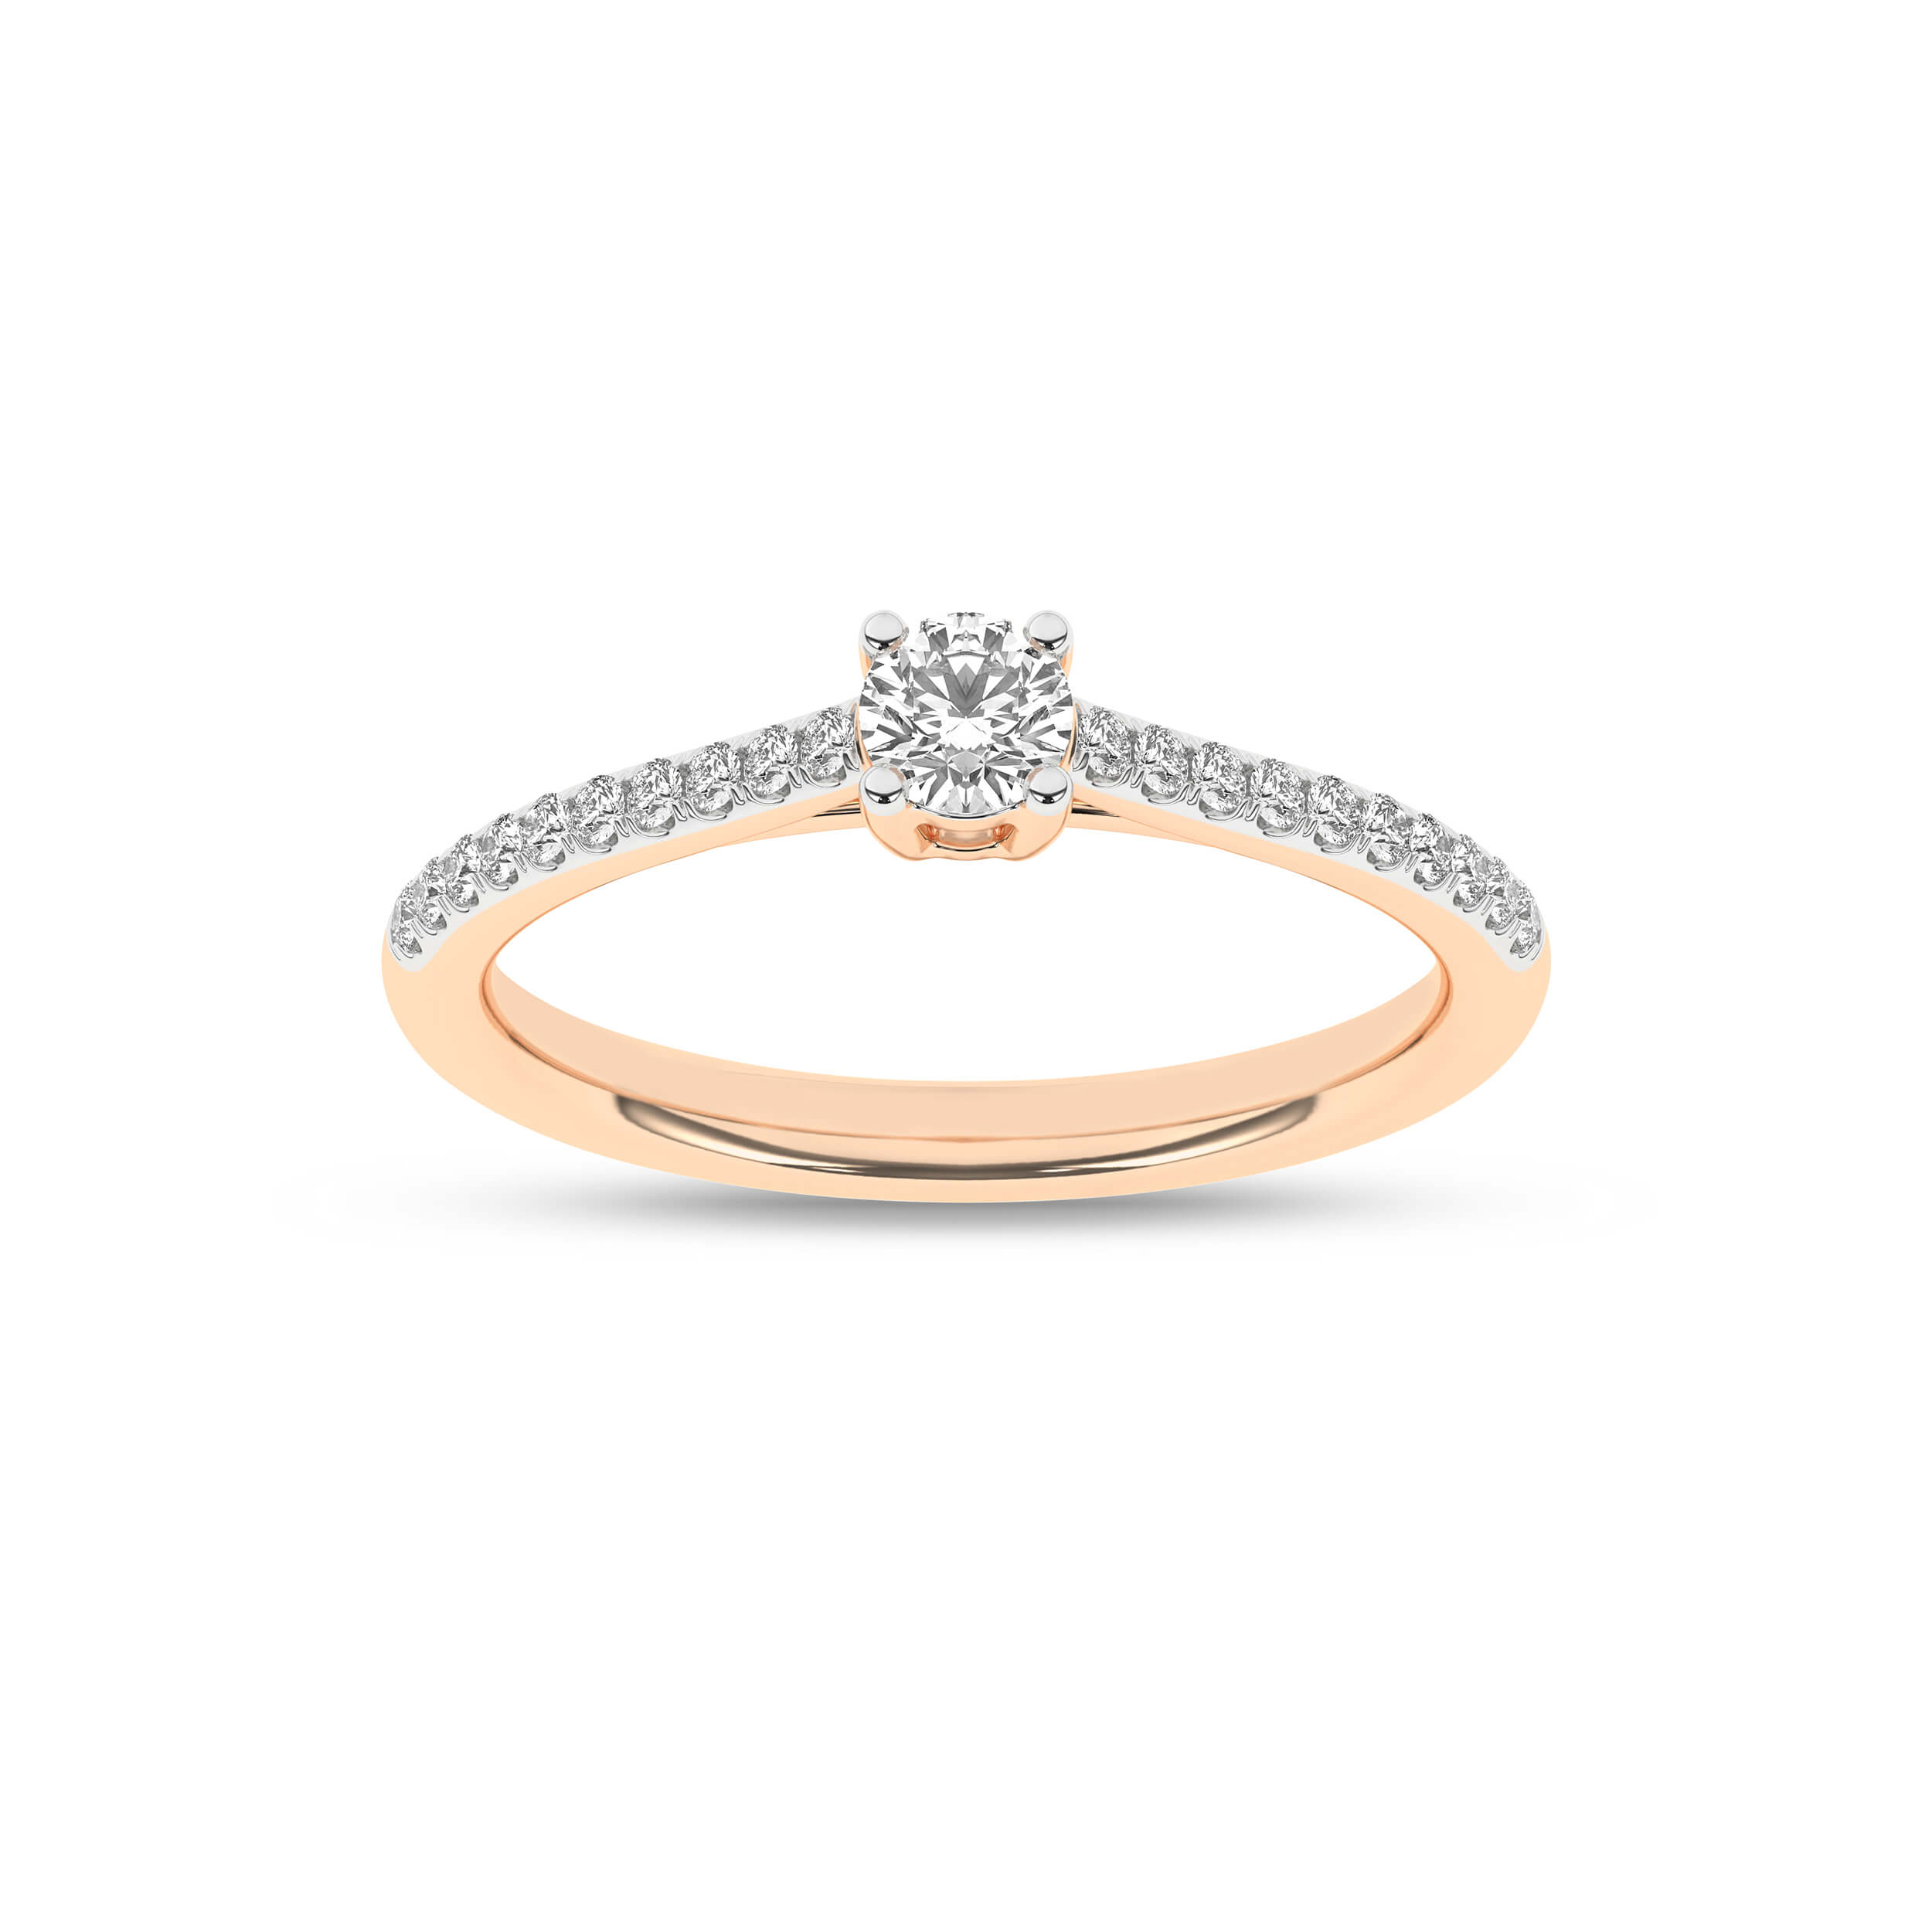 Inel de logodna din Aur Roz 14K cu Diamante 0.25Ct, articol RB19582EG, previzualizare foto 1